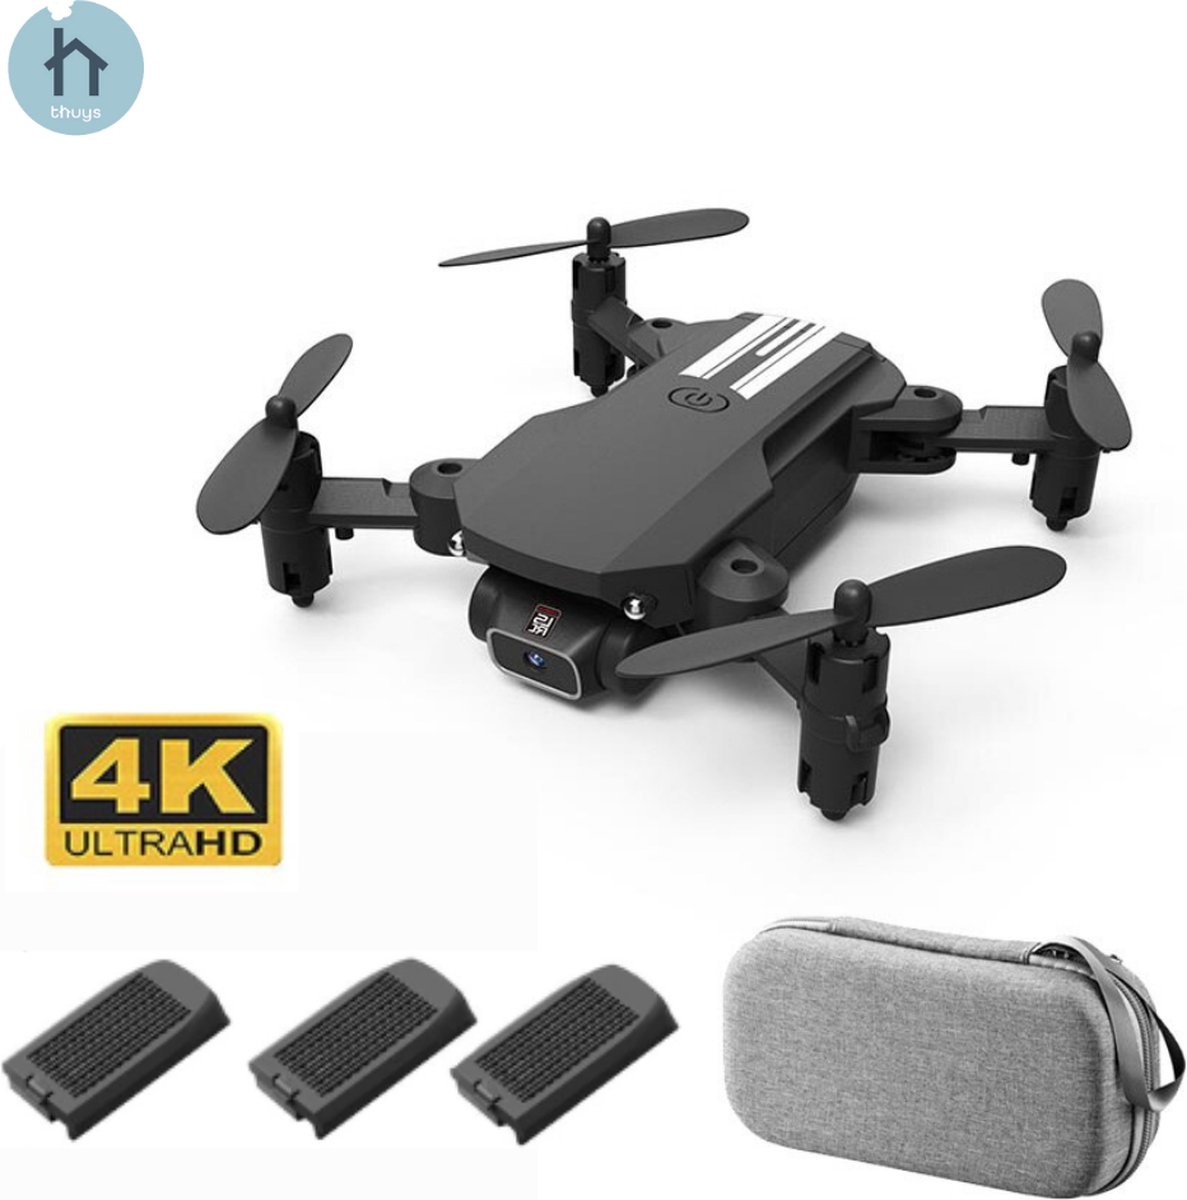 Drone - Drone Met Camera 4K - Mini Drone Auto Return - Handgebaar Commando's - 120° Wide Angle - 360° Roll - 3 Batterijen